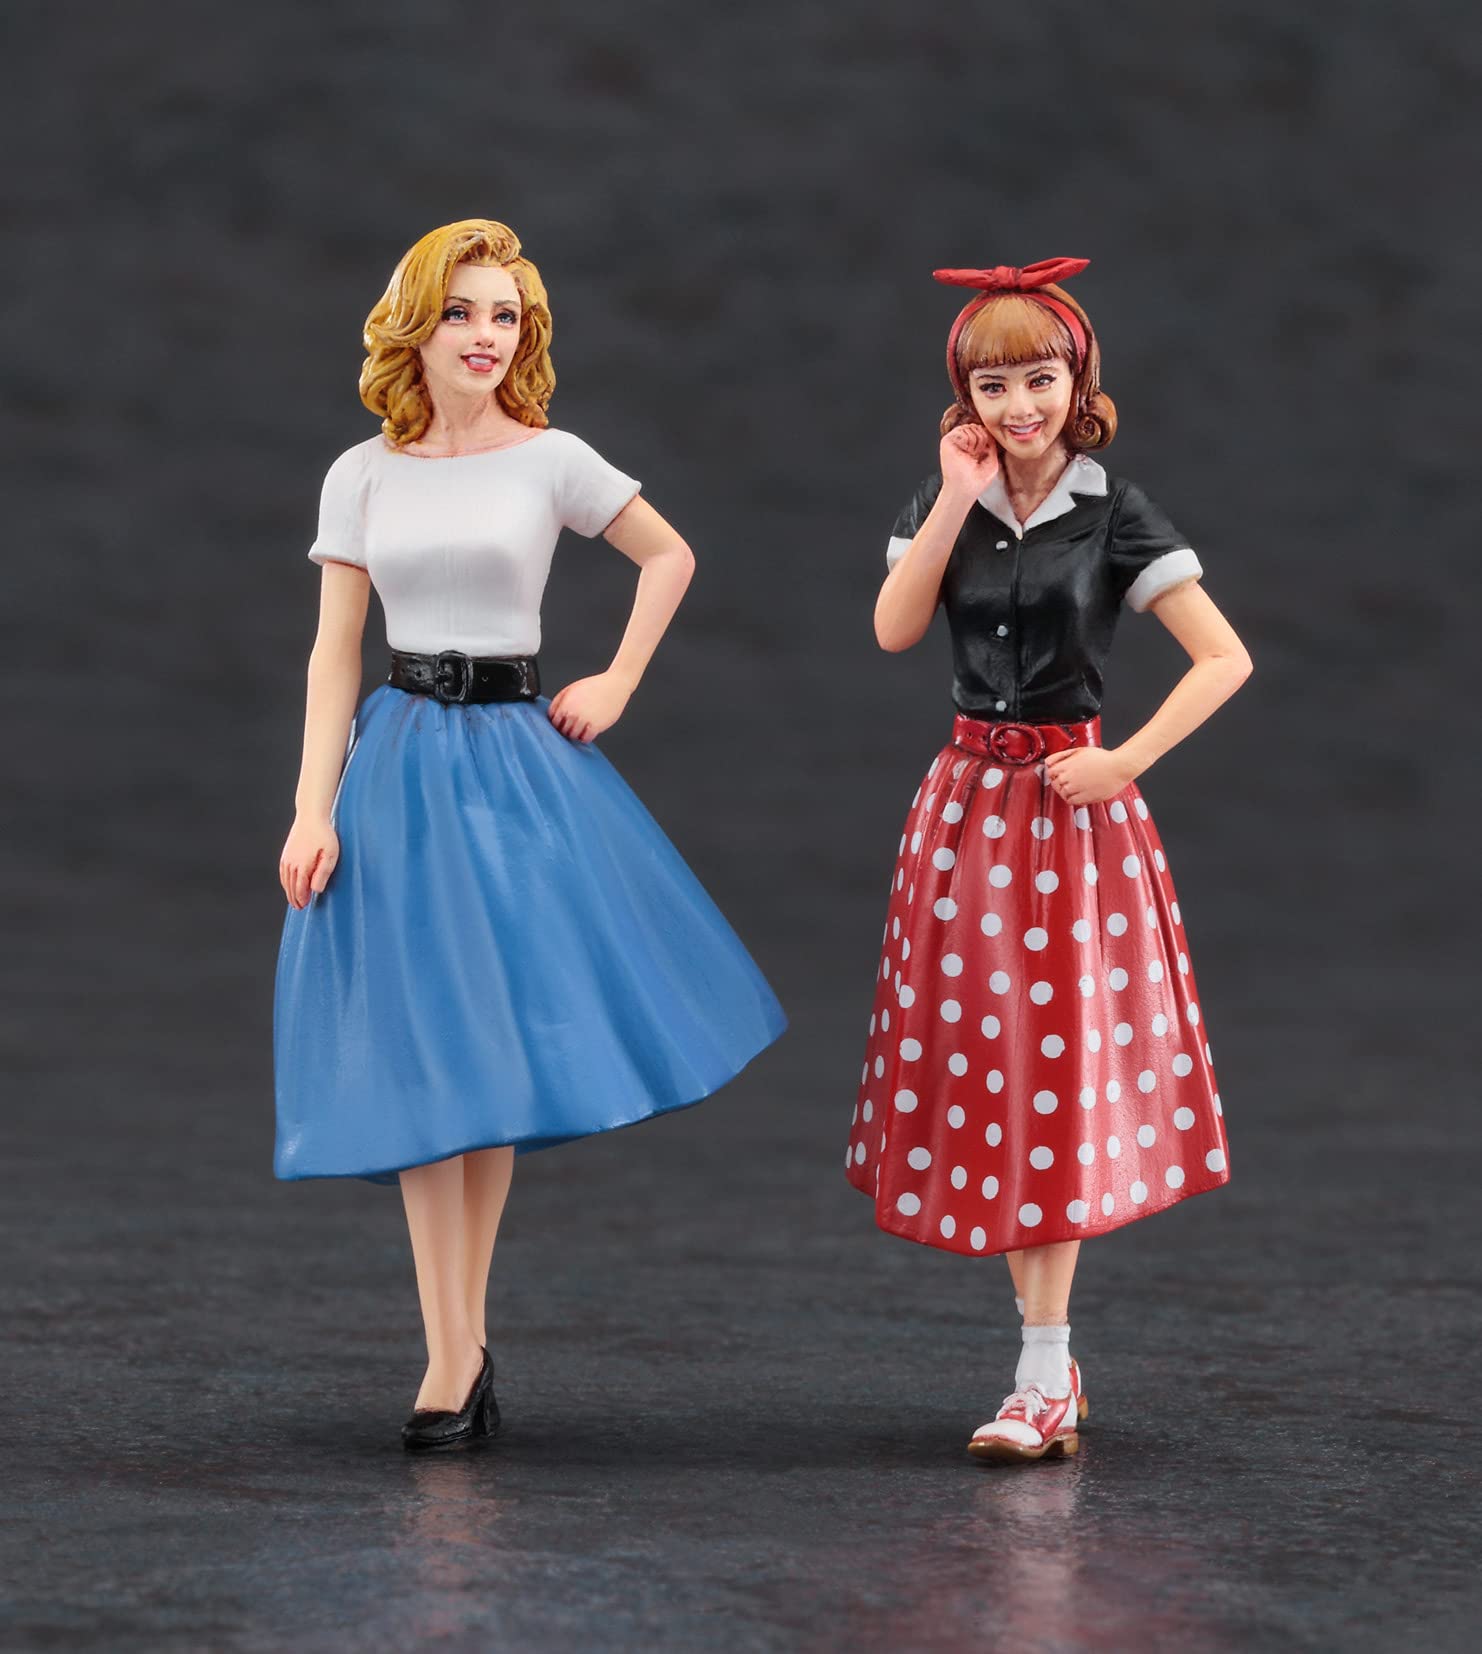 Hasegawa FC10 1/24 Figure Collection Series 50's American Girls Figure (Set of 2) Plastic Model